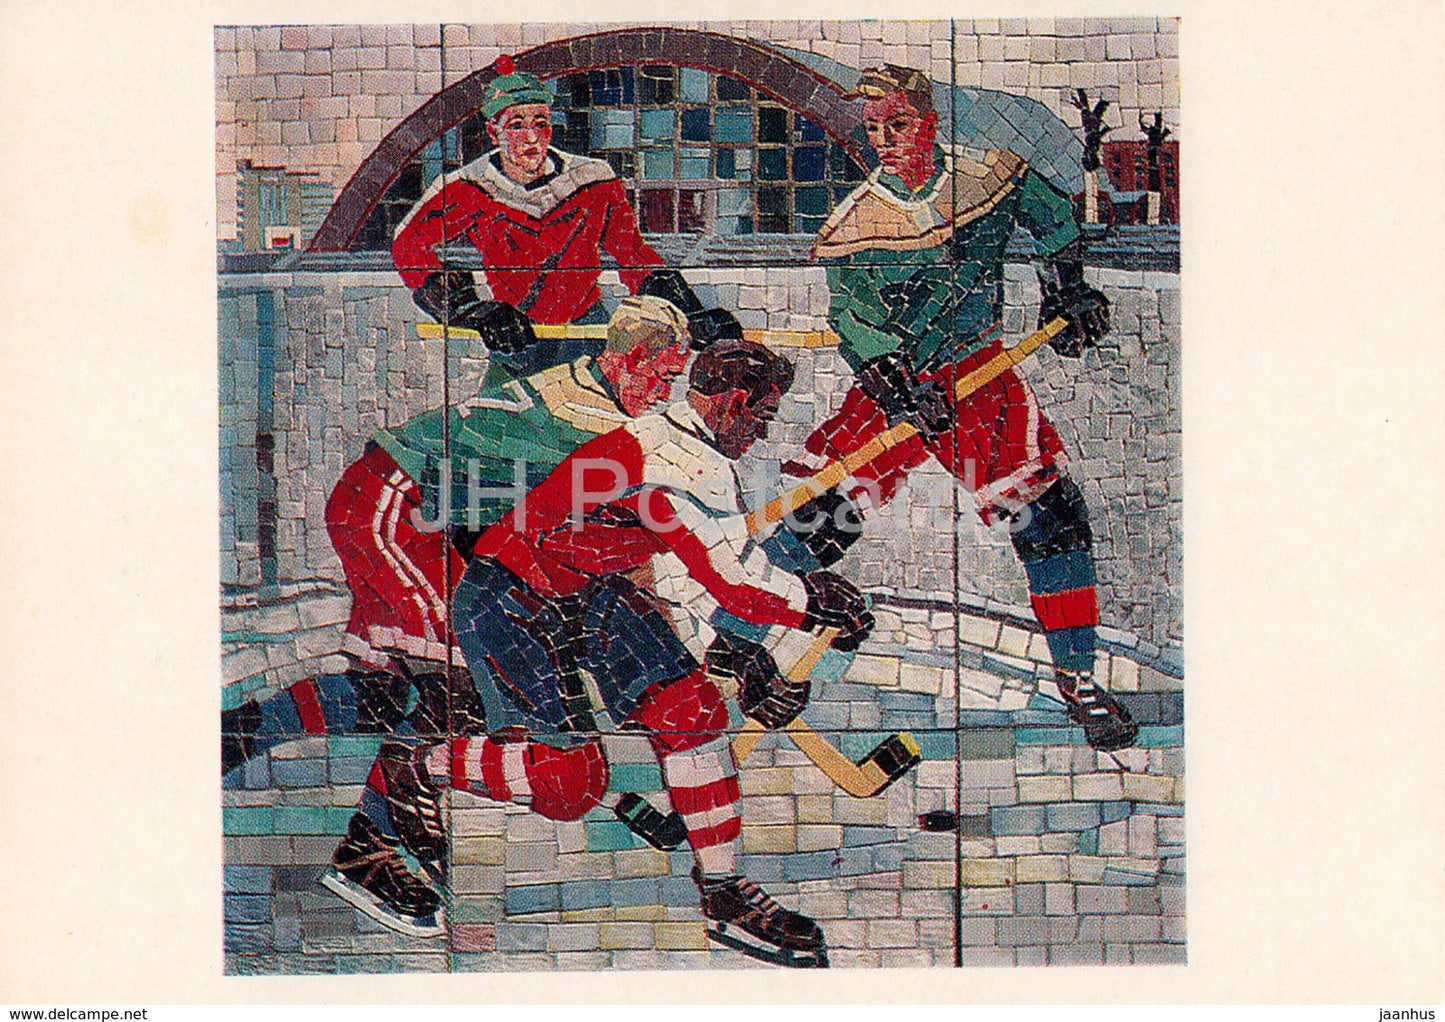 painting by A. Deineka - Ice Hockey Players - Sport - Soviet art - 1978 - Russia USSR - unused